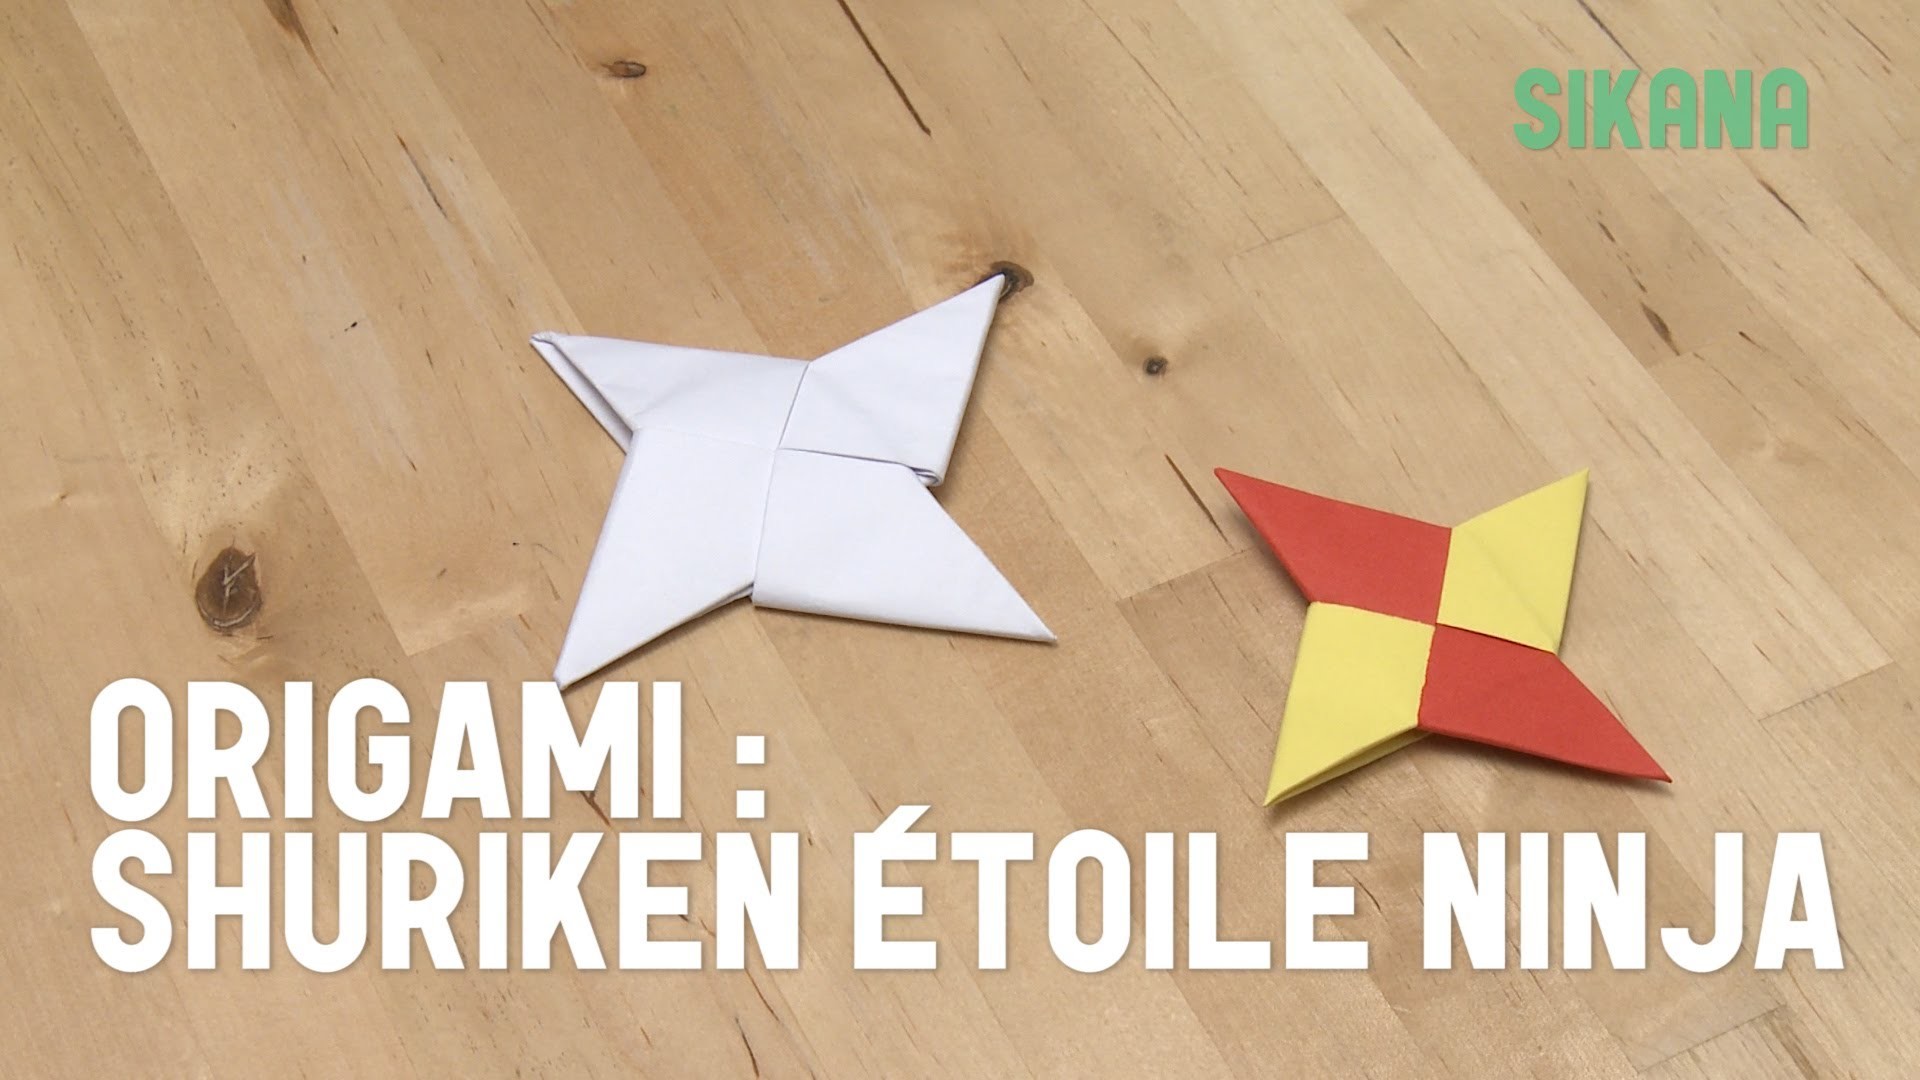 Origami : Faire une étoile ninja (shuriken) en papier - HD